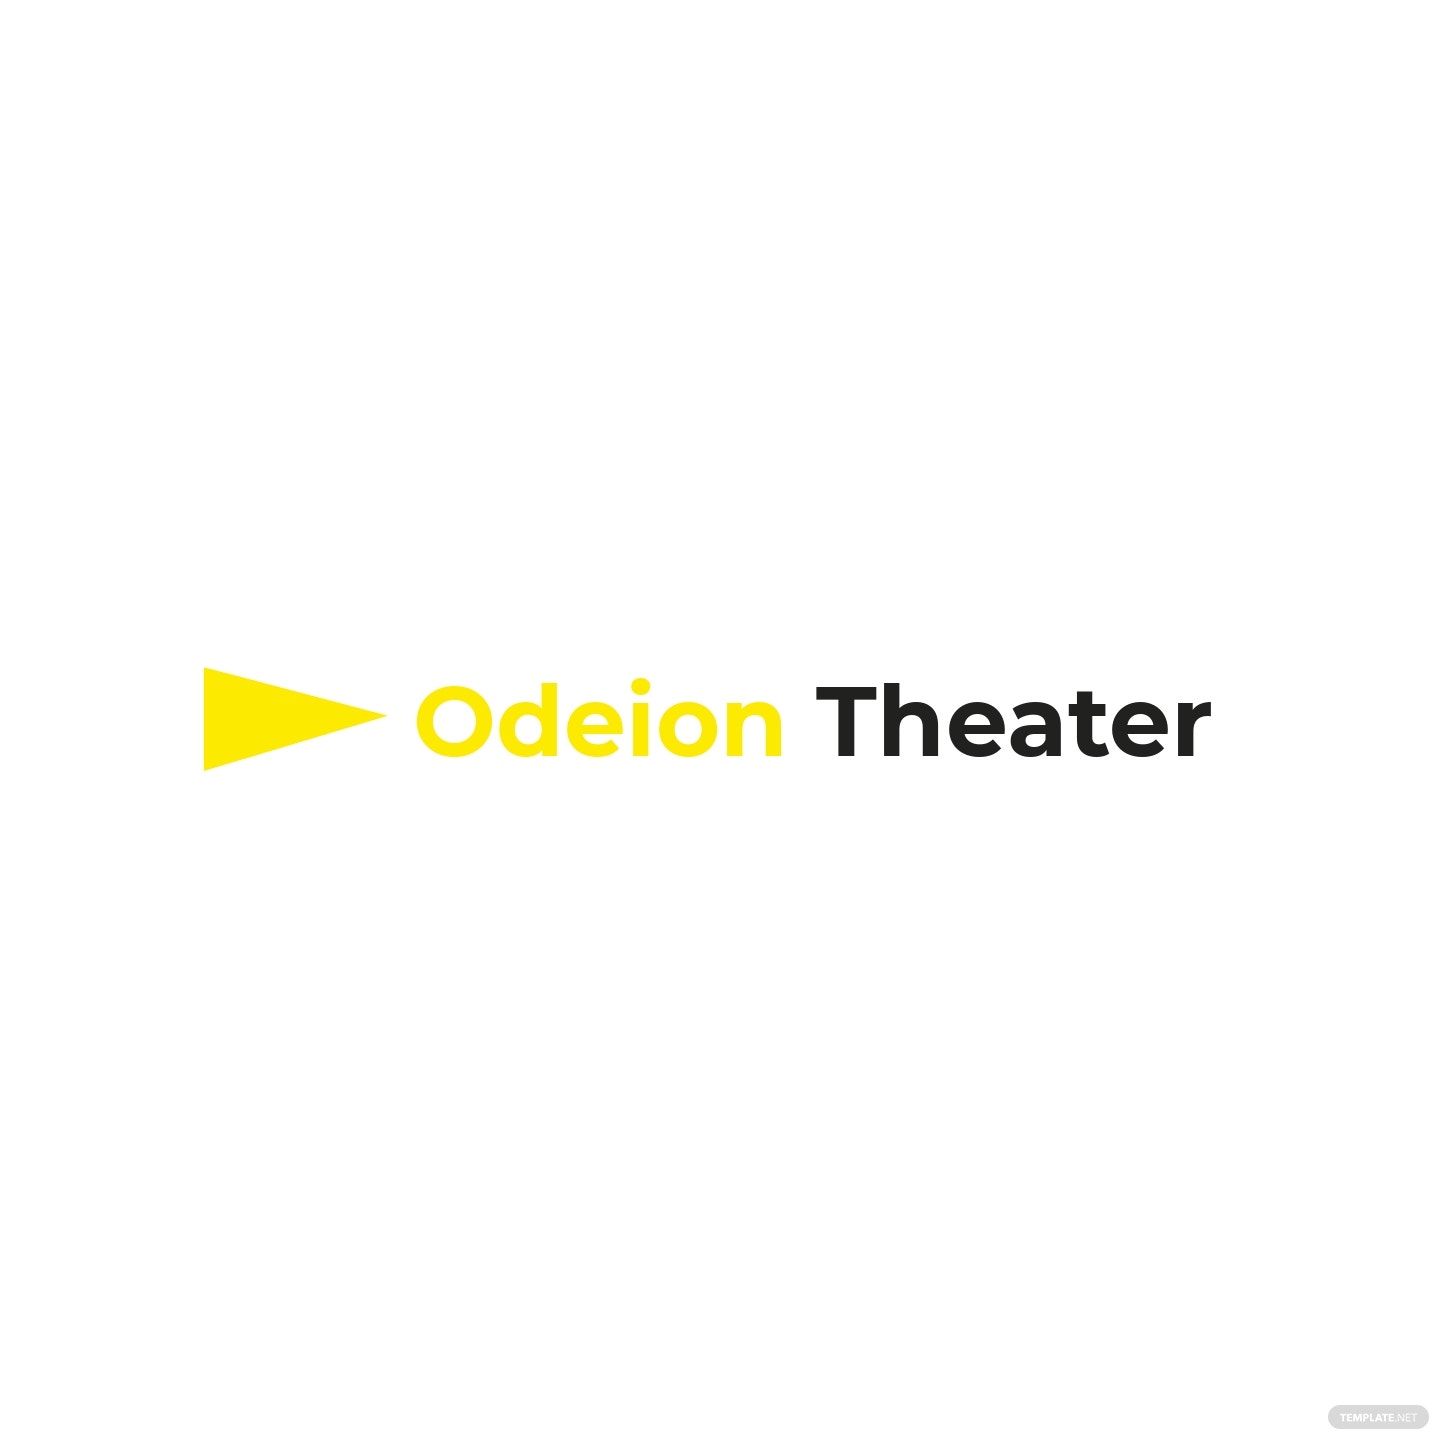 theater company logo template